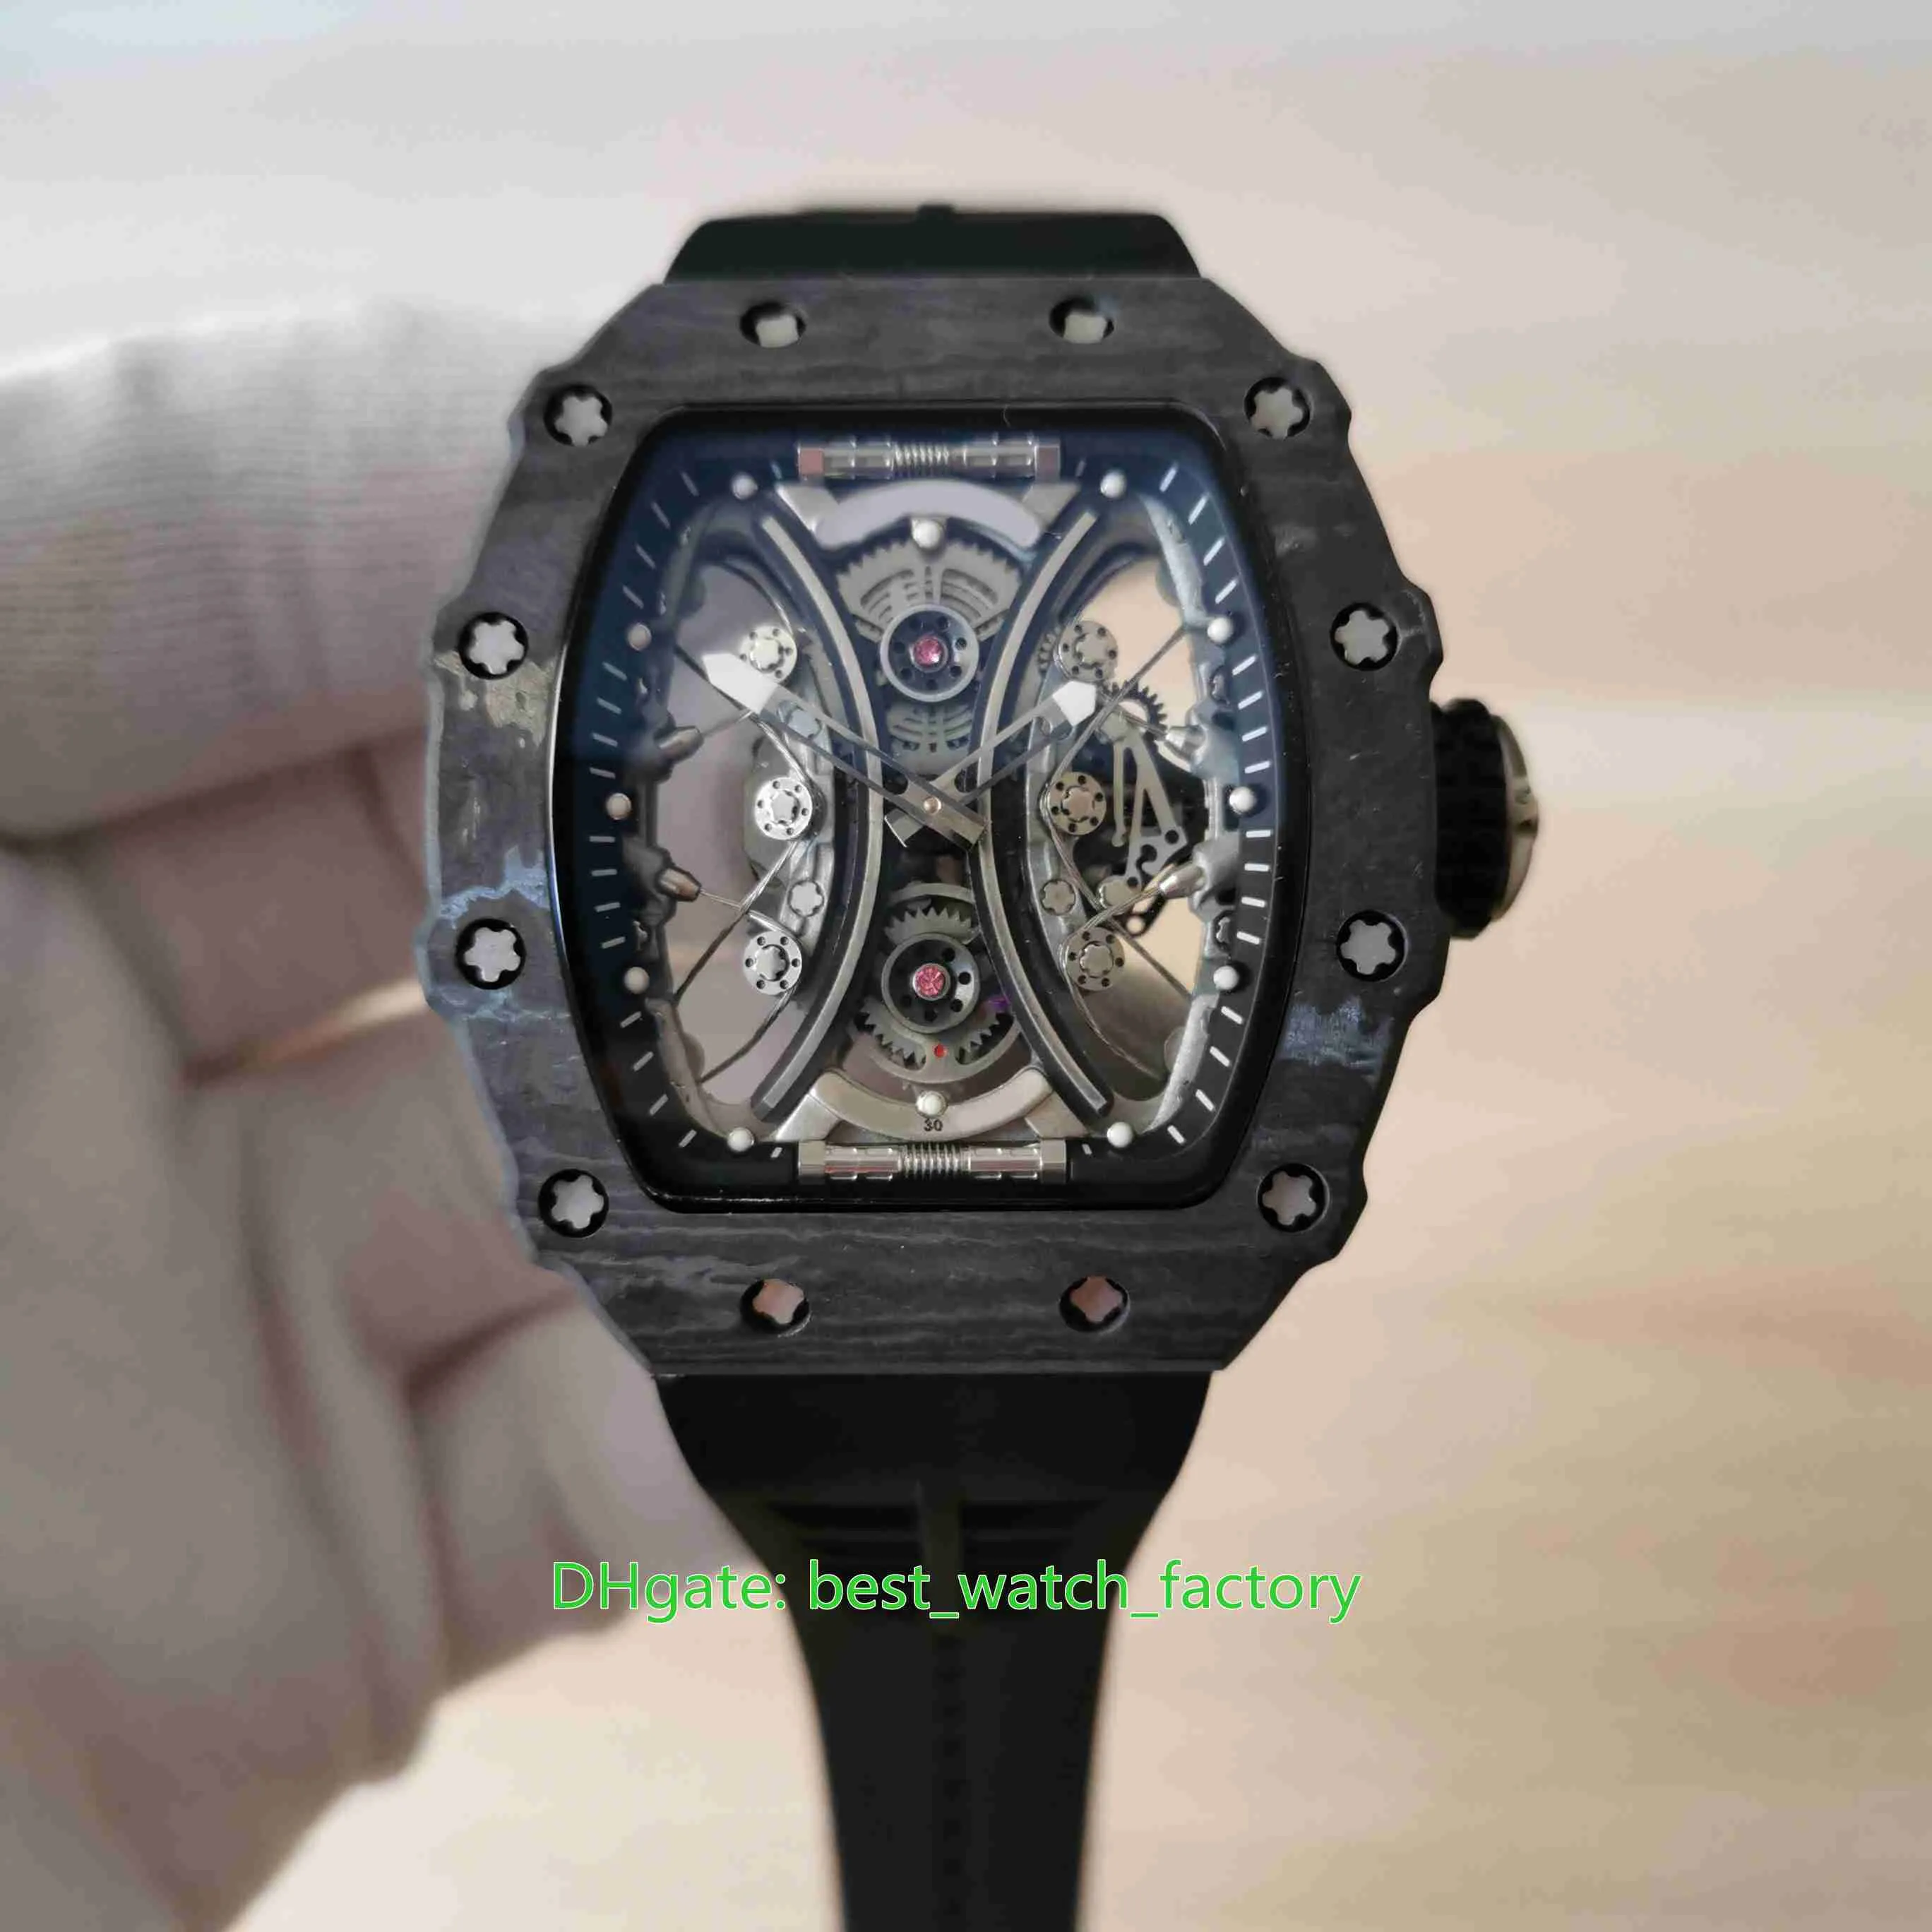 Verkauf hochwertiger Uhren 44 mm x 50 mm RM53-01 PABLO MAC DONOUGH Skeleton NTPT Carbon Fiber Transparent Mechanical Automatic 256c